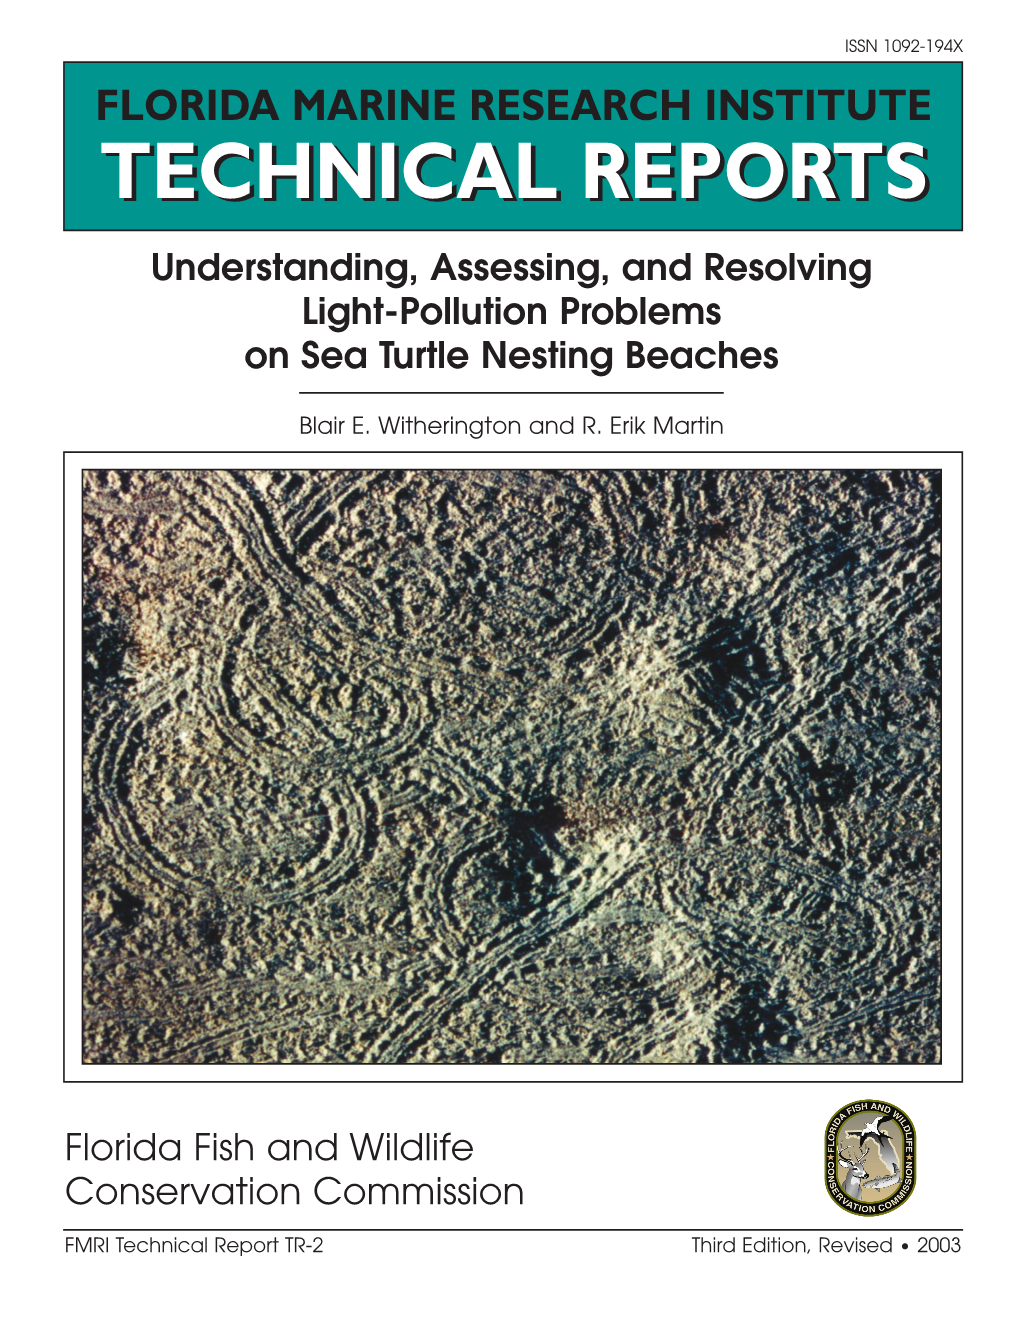 Florida Marine Research Institute Technical Reports